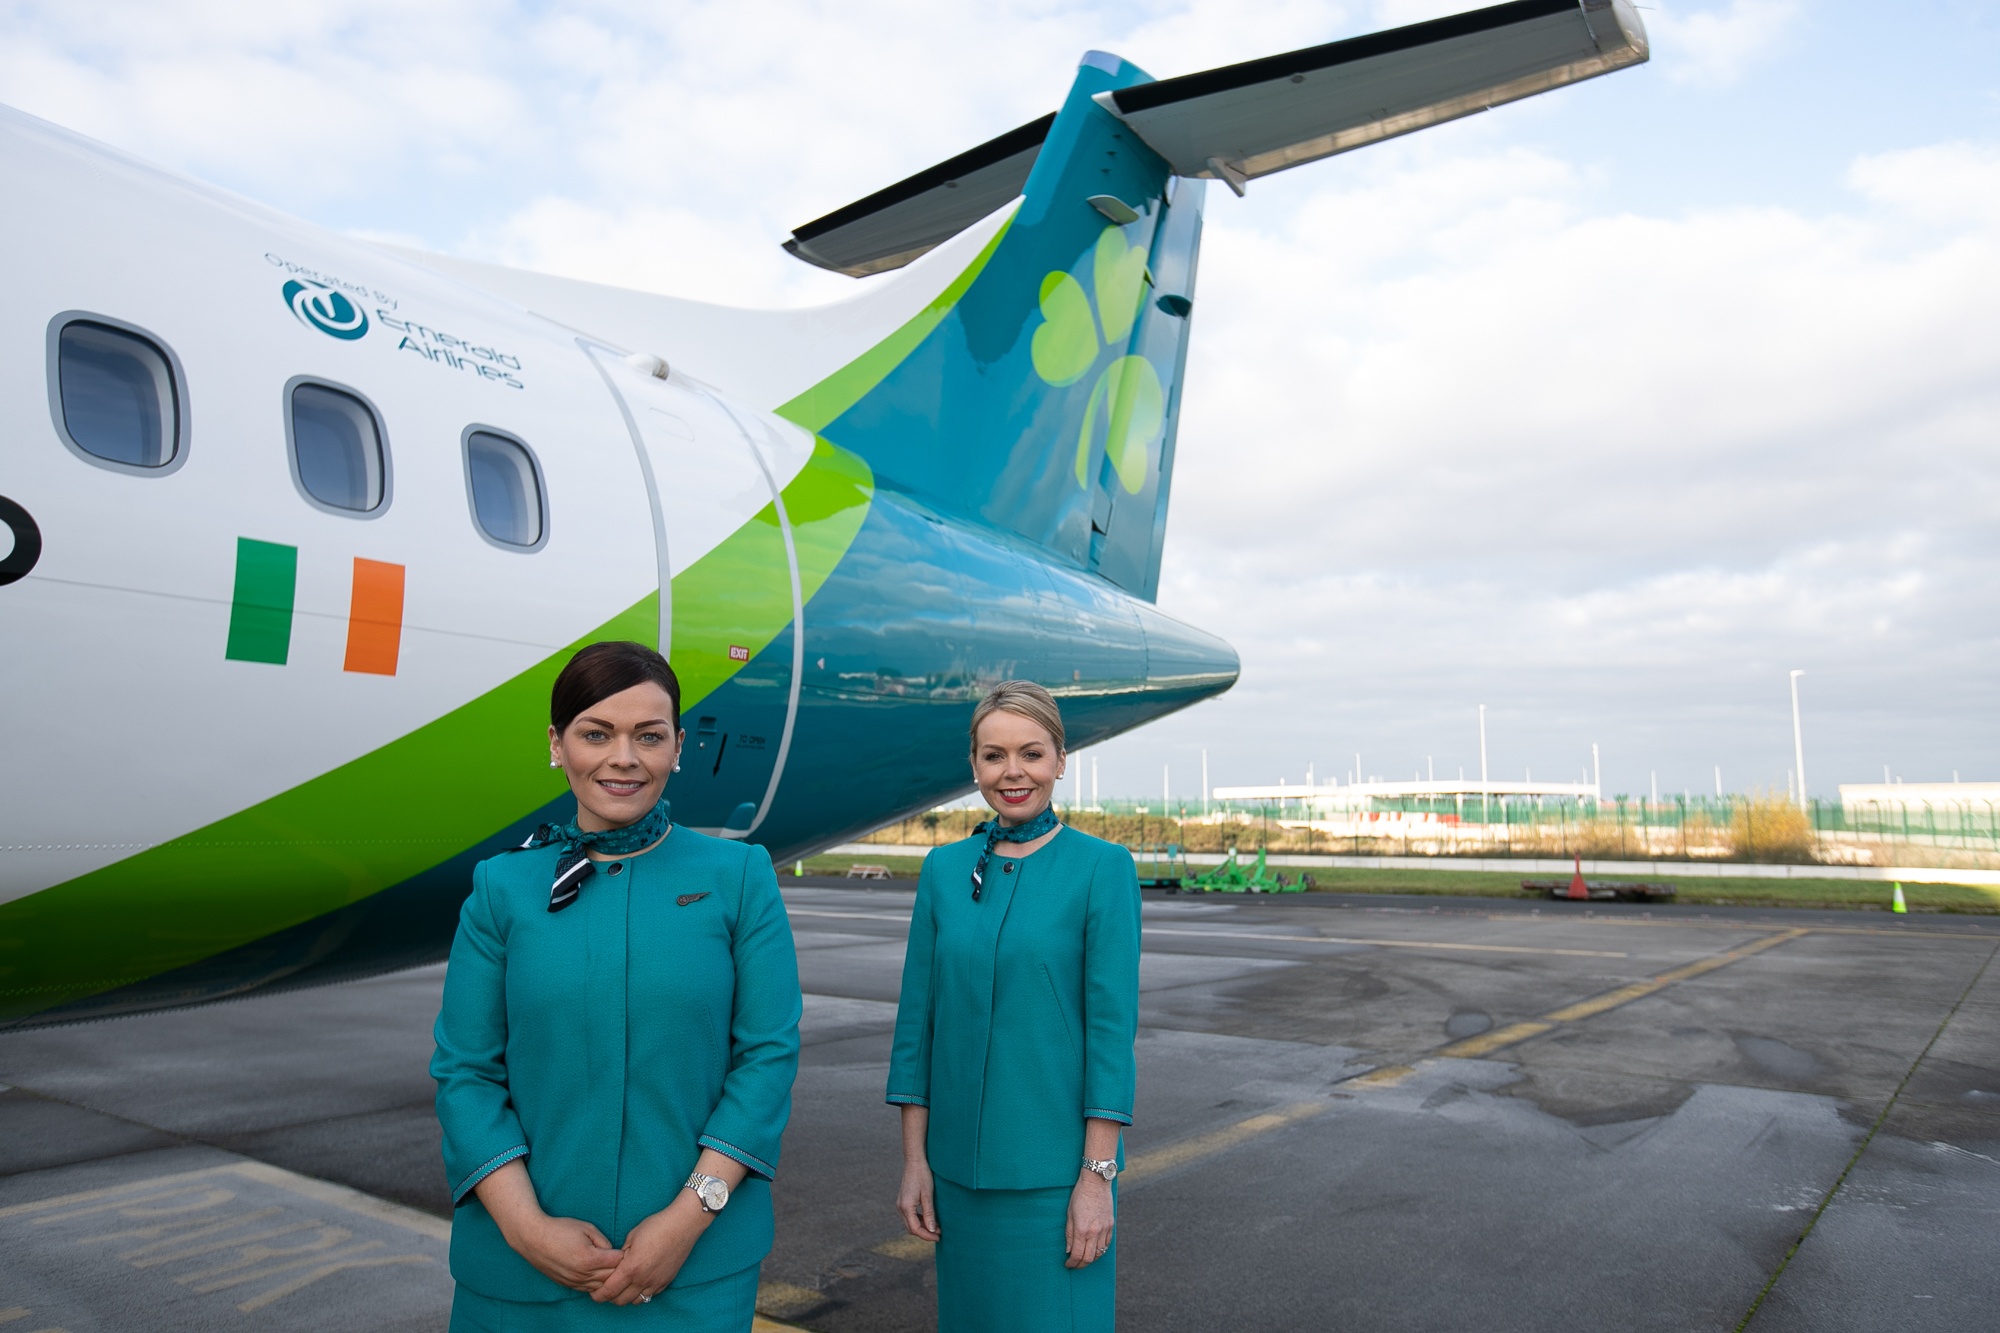 Isle of Man welcomes new Aer Lingus Regional link with Belfast